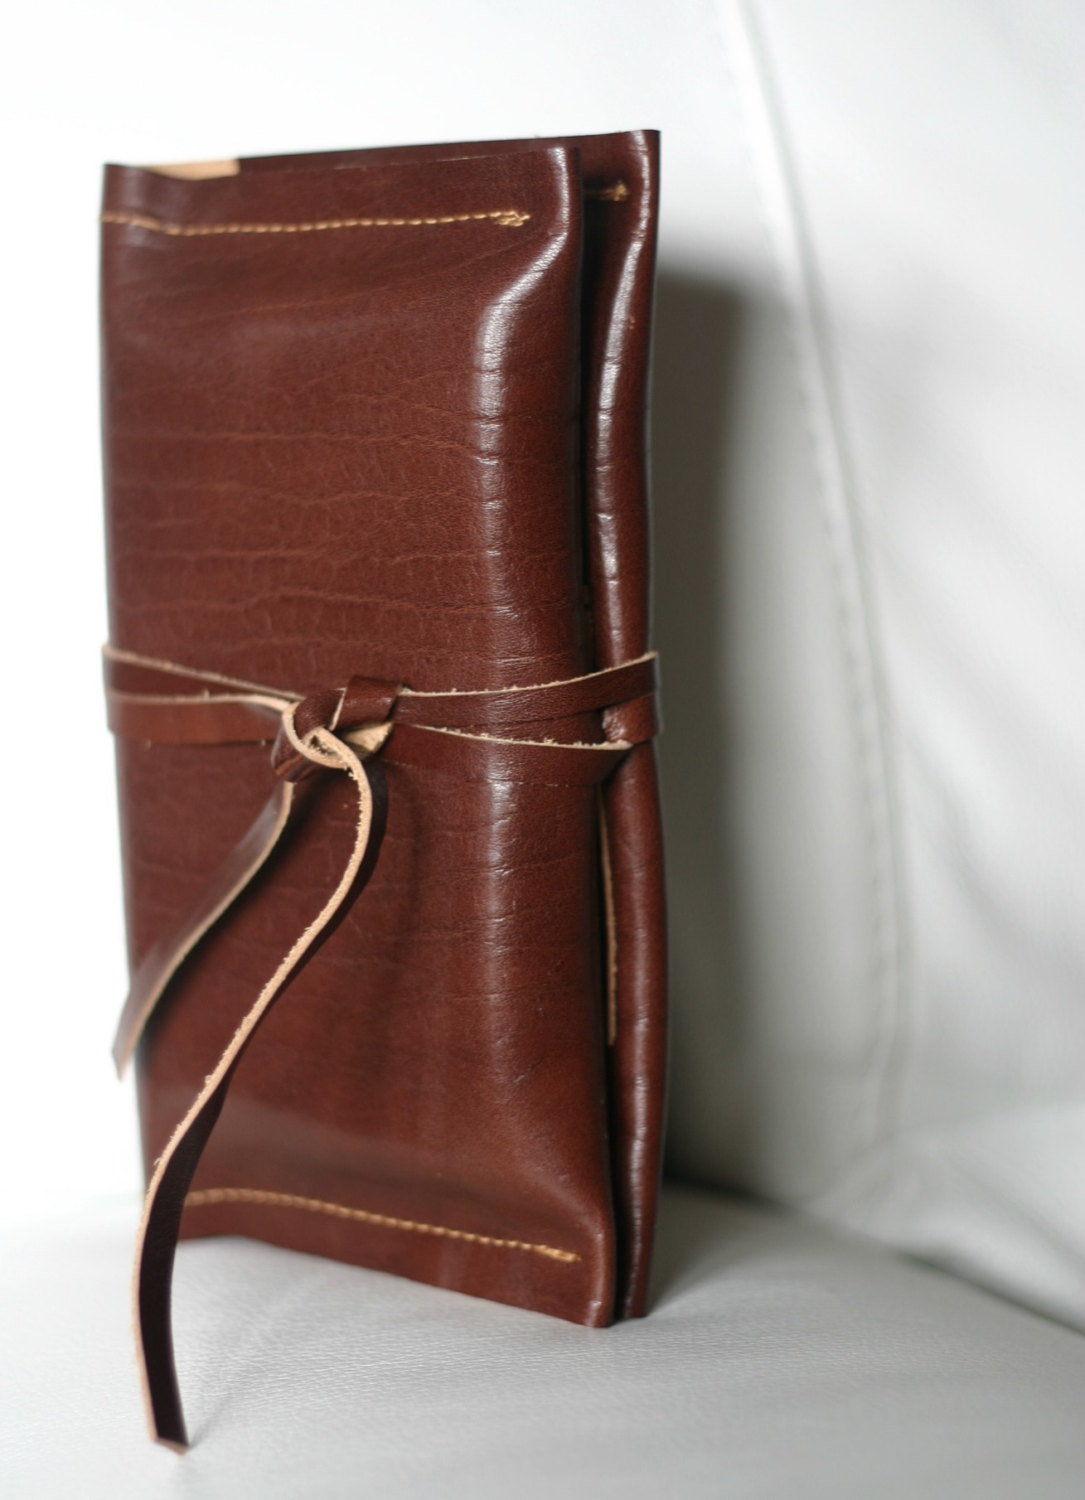 Italian leather cover - phone case